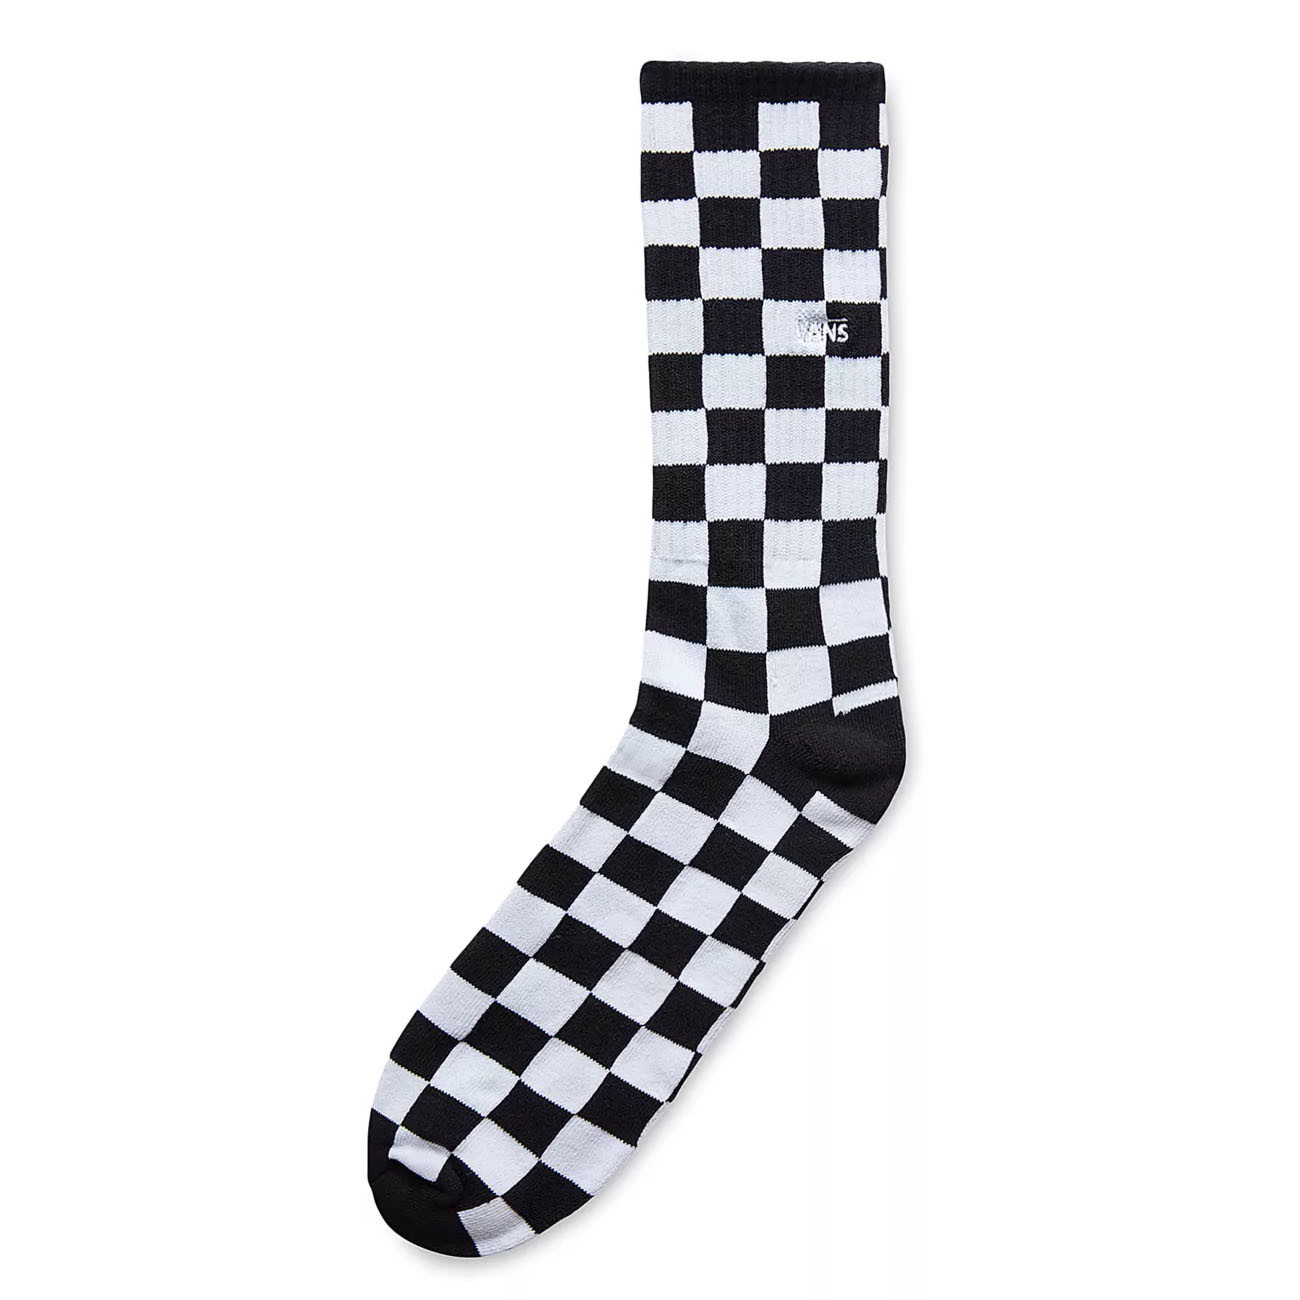 vans socks checkerboard